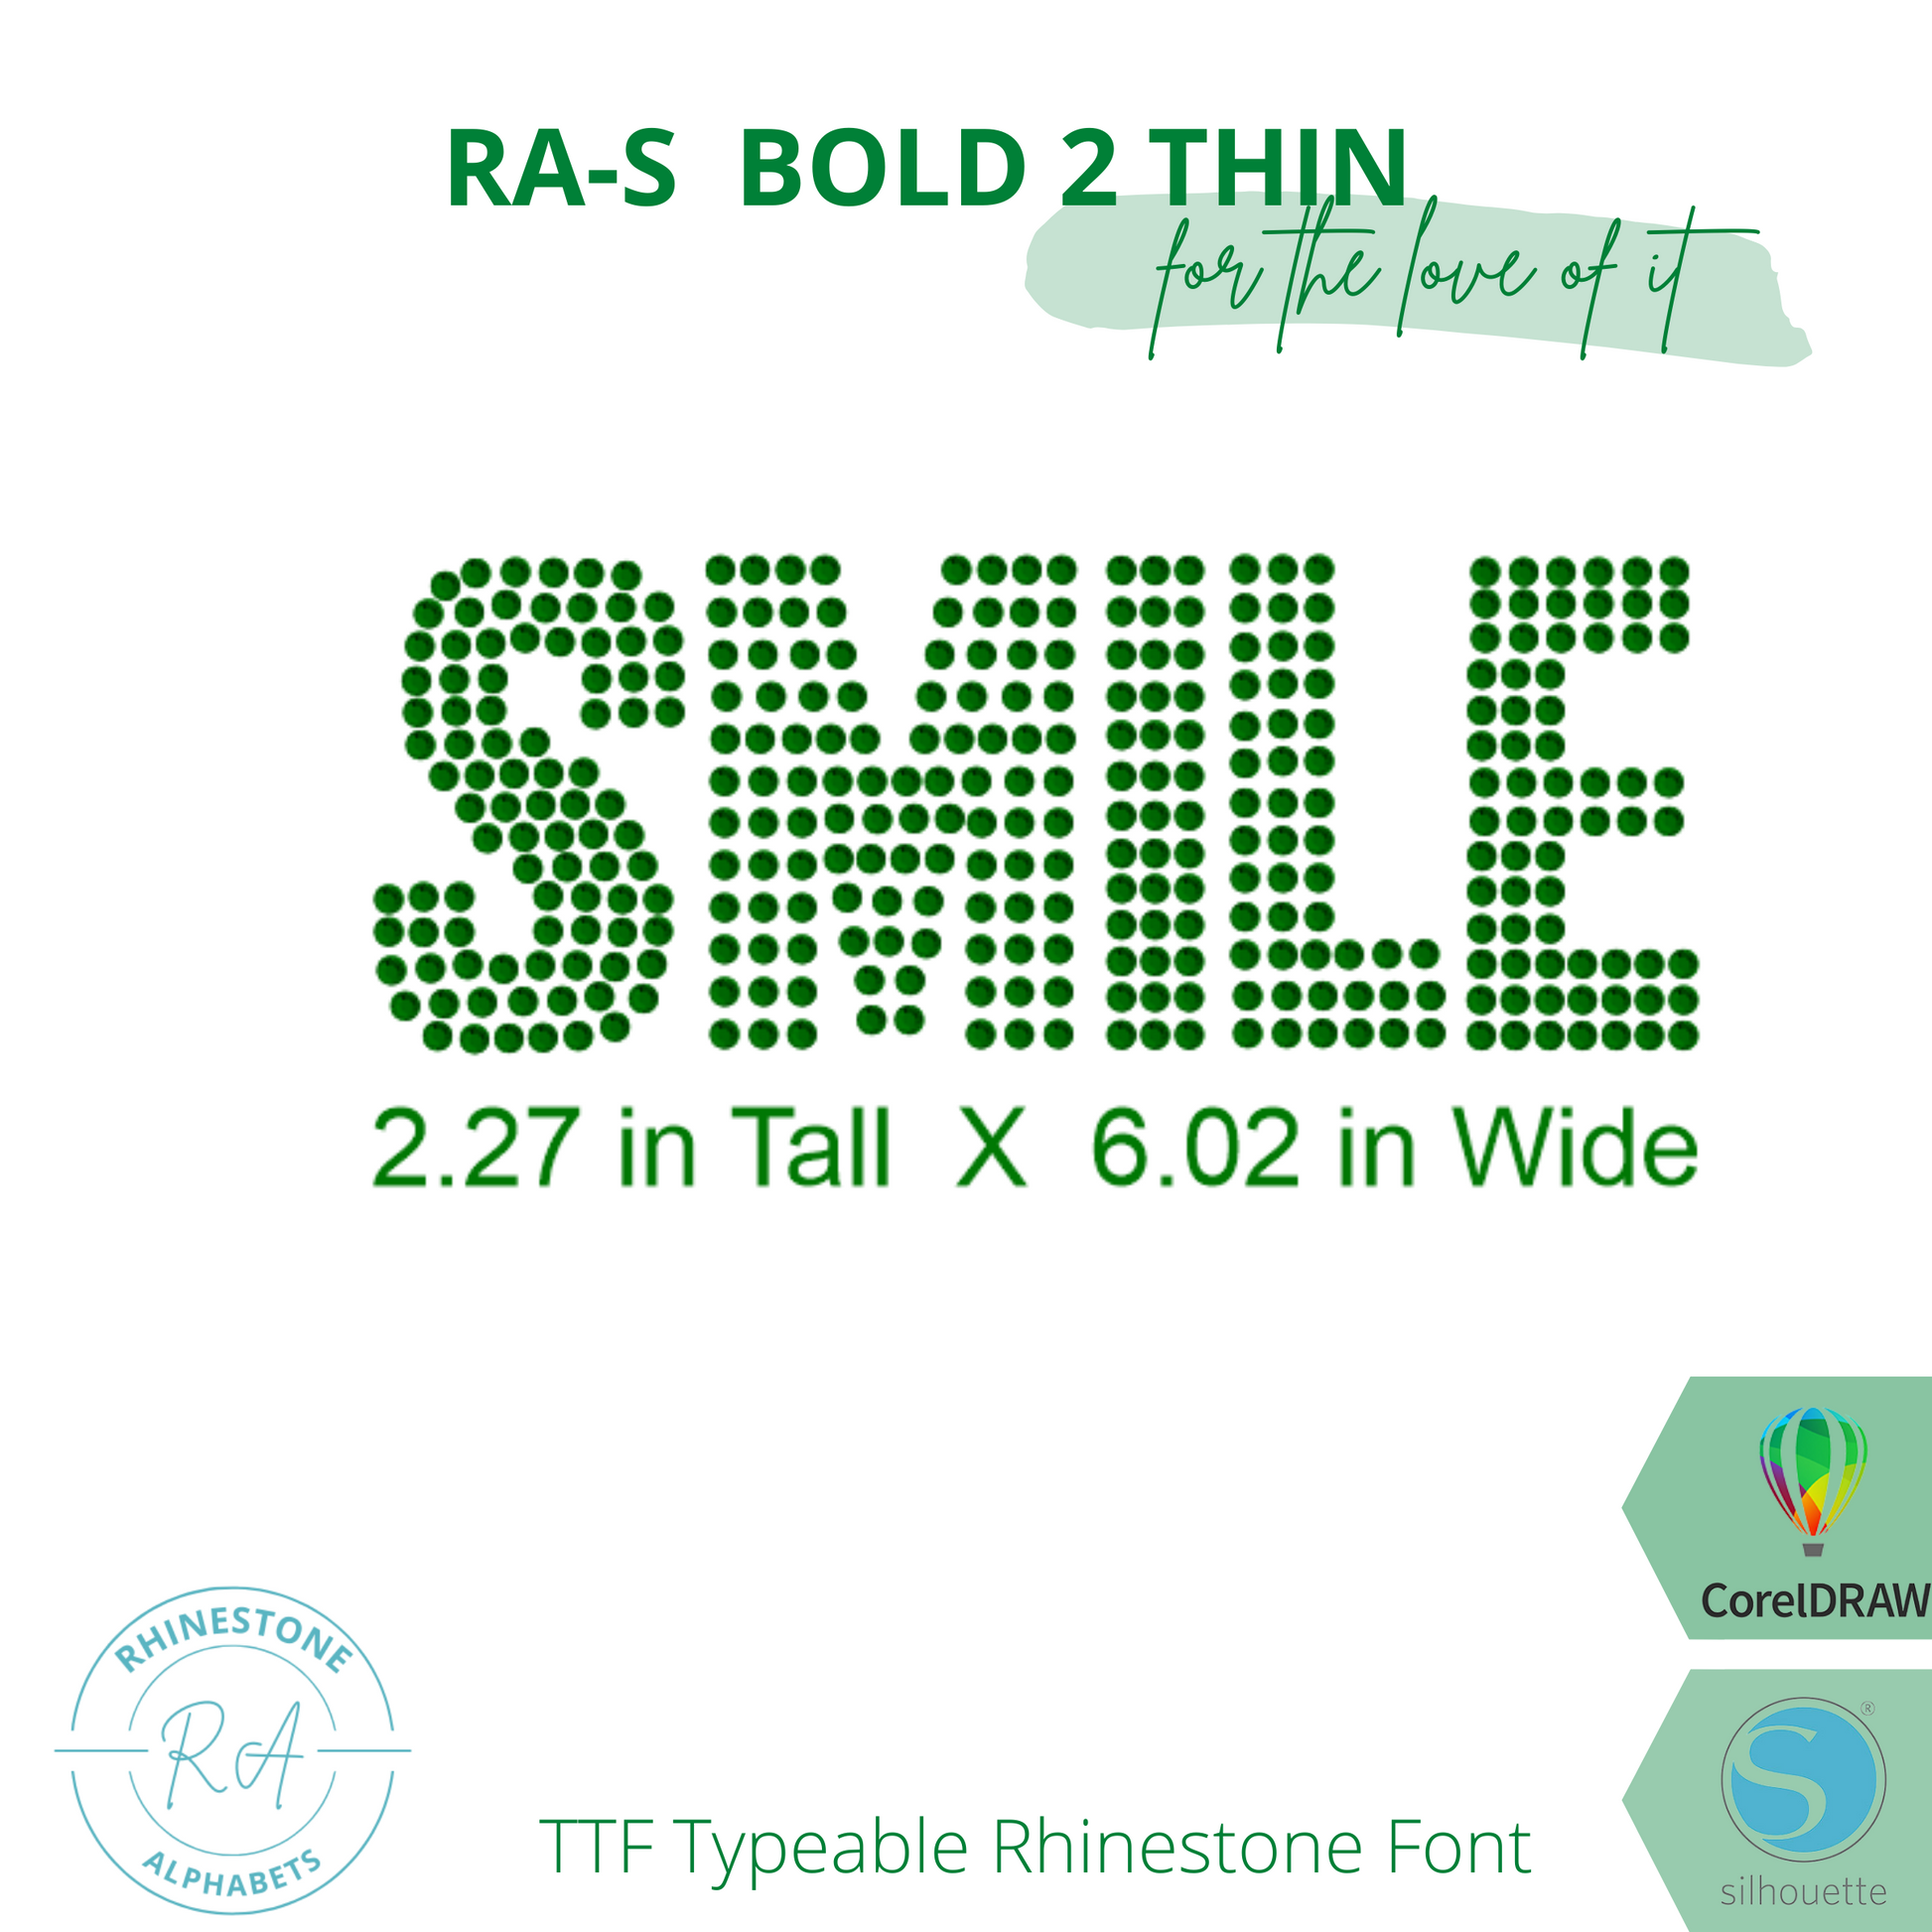 RA-S Bold 2 Thin - RhinestoneAlphabets